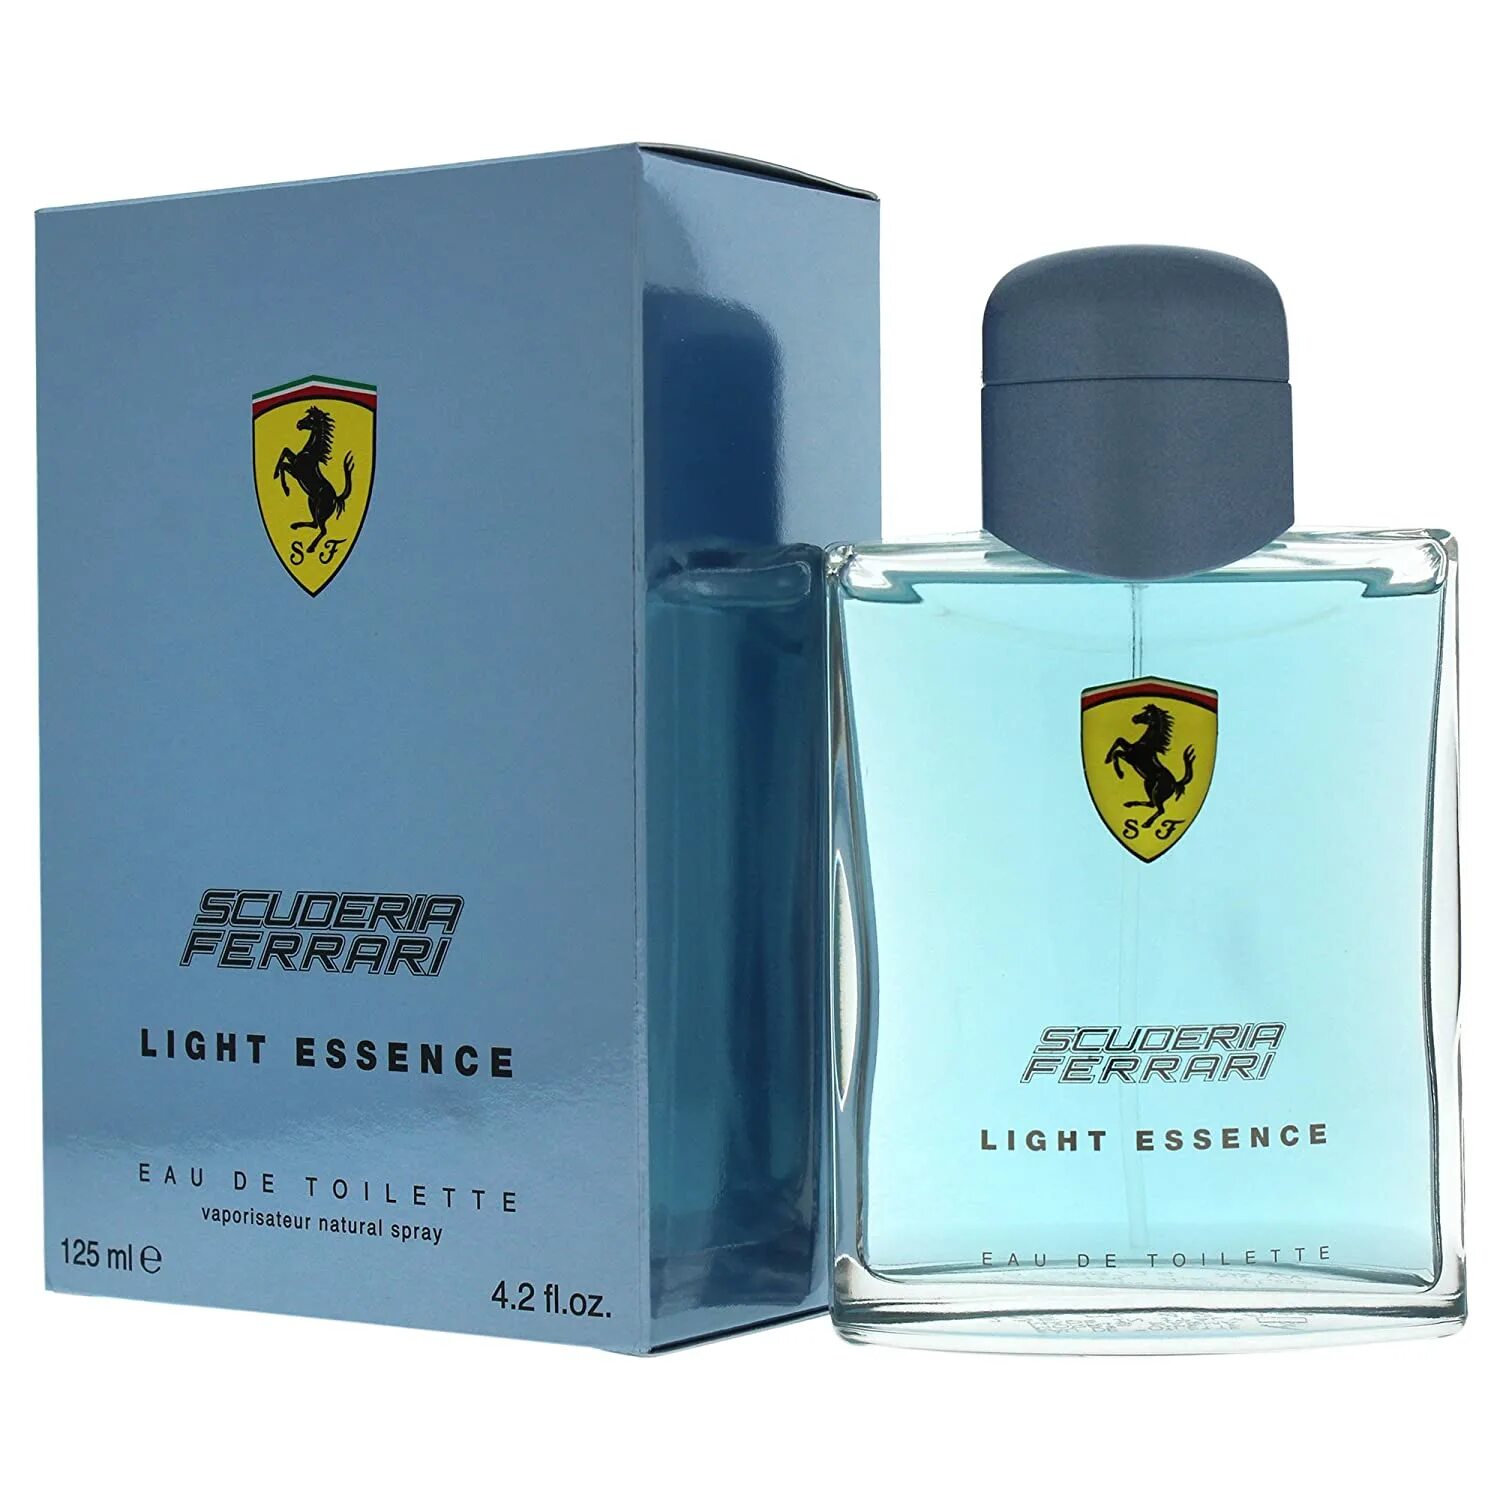 Scuderia Ferrari Perfume. Ferrari Scuderia Ferrari EDT - 75ml. Light essence